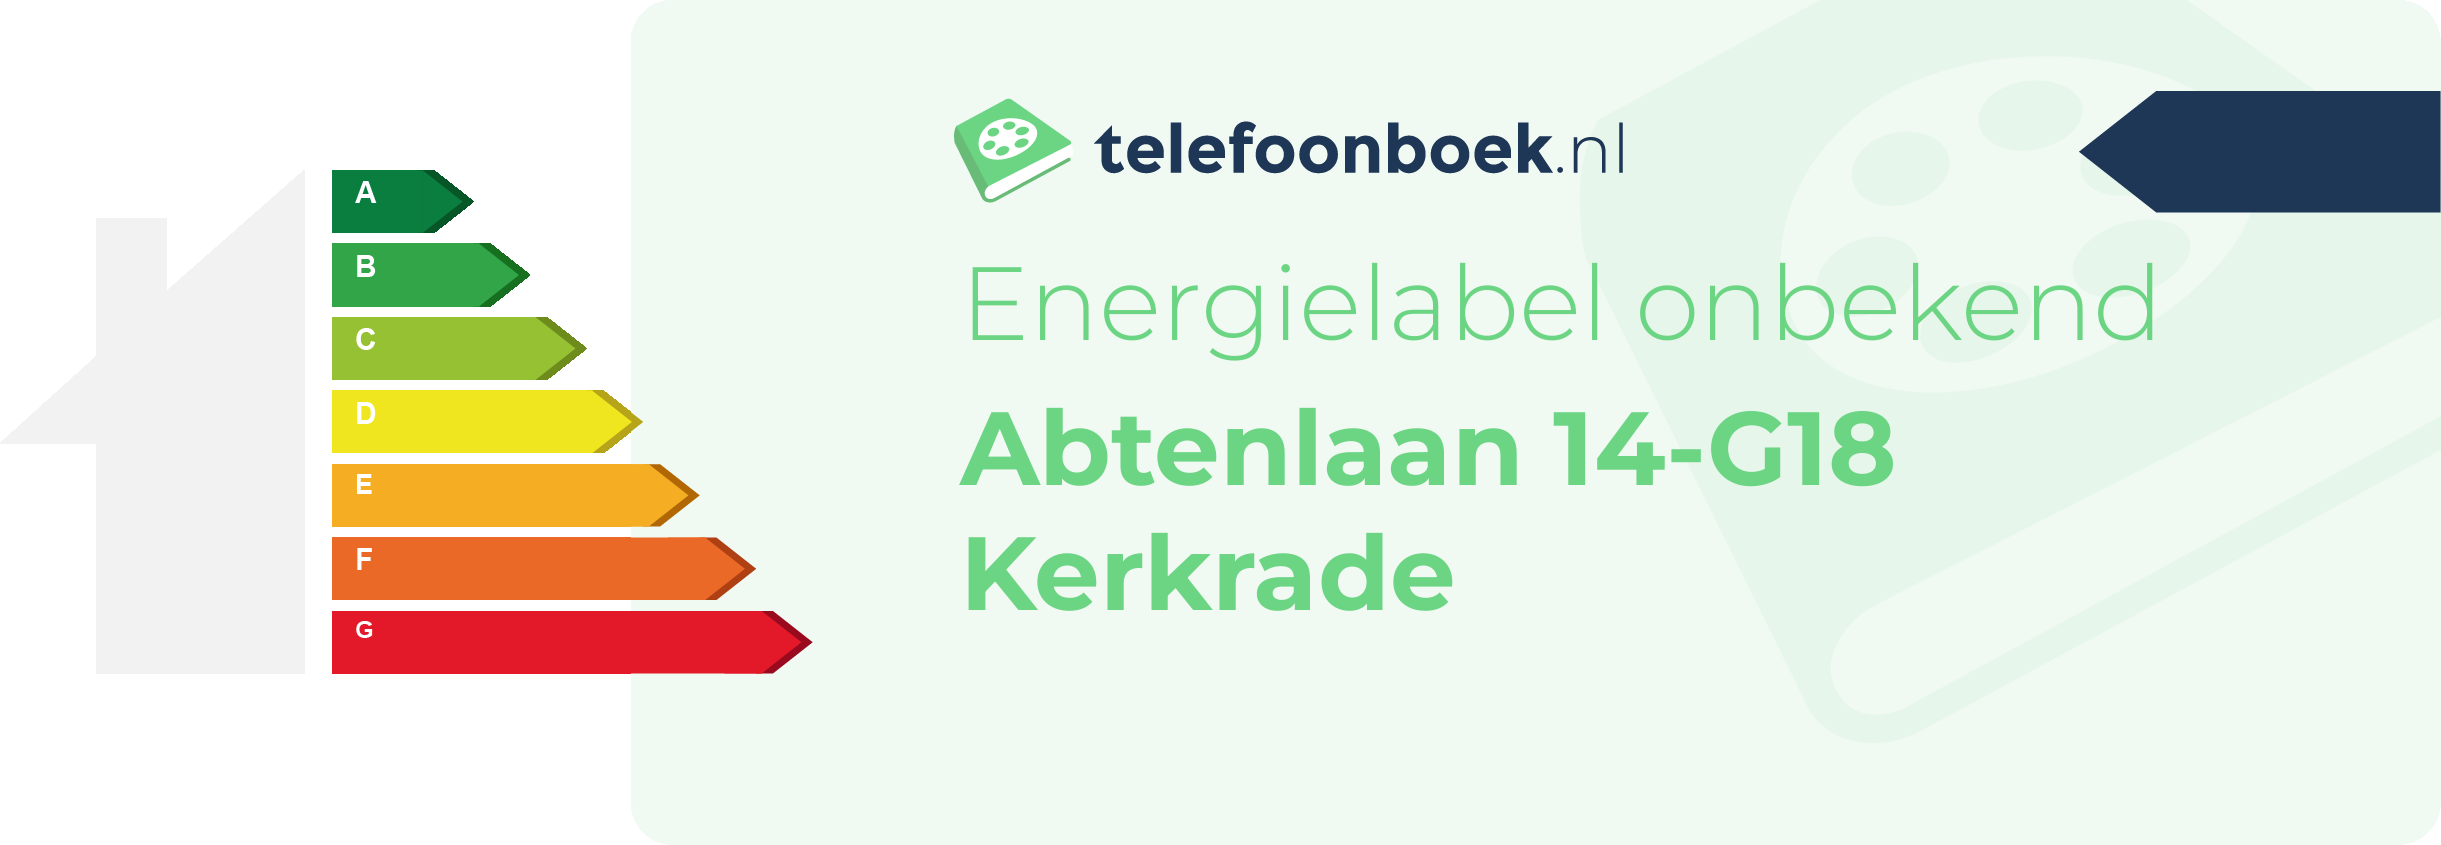 Energielabel Abtenlaan 14-G18 Kerkrade